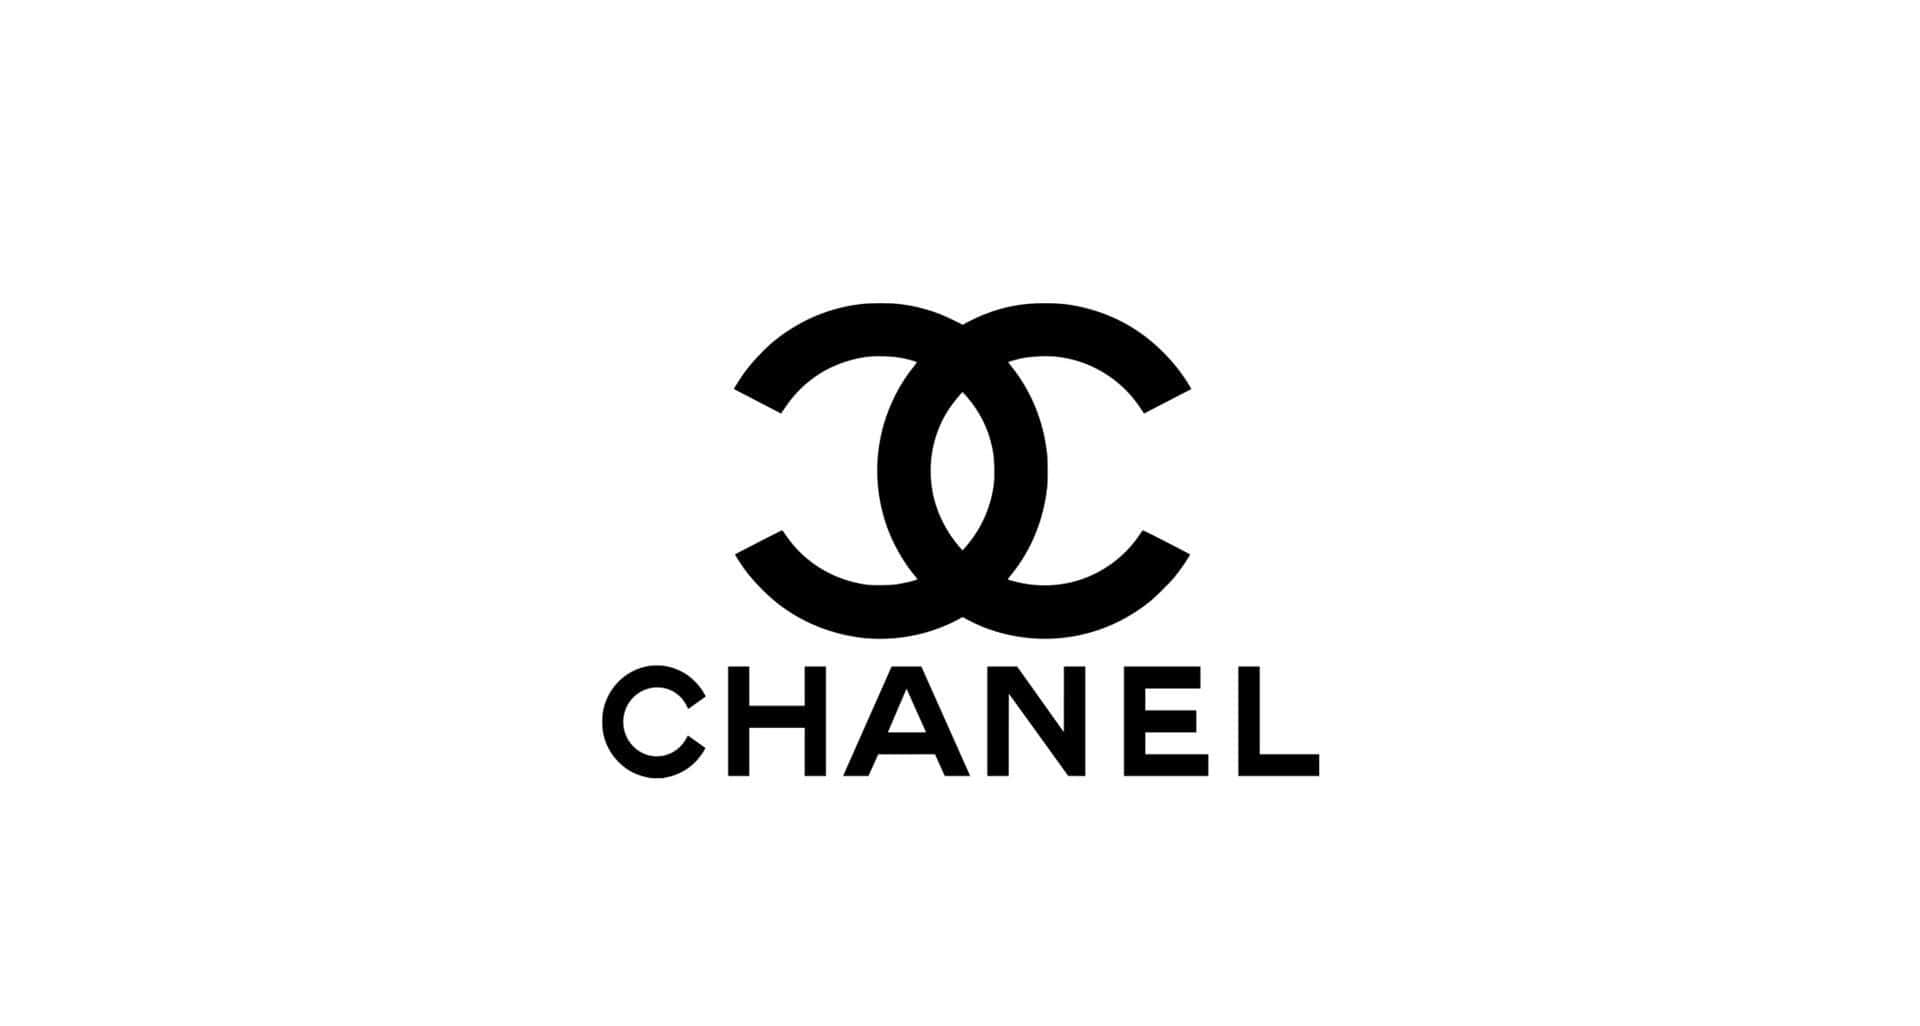 200+] Chanel Logo Backgrounds